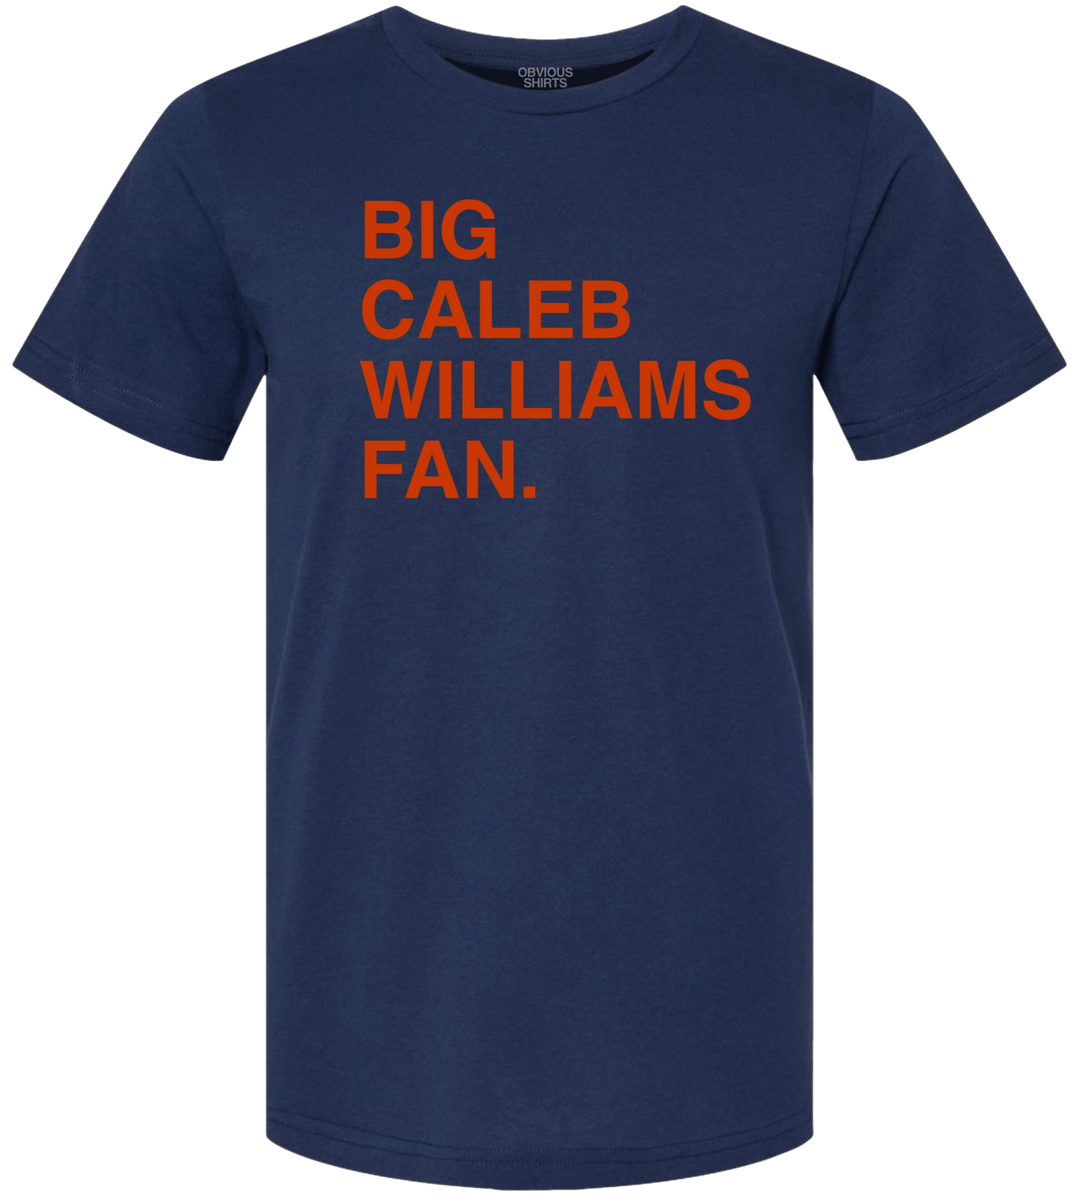 BIG CALEB WILLIAMS FAN. - OBVIOUS SHIRTS